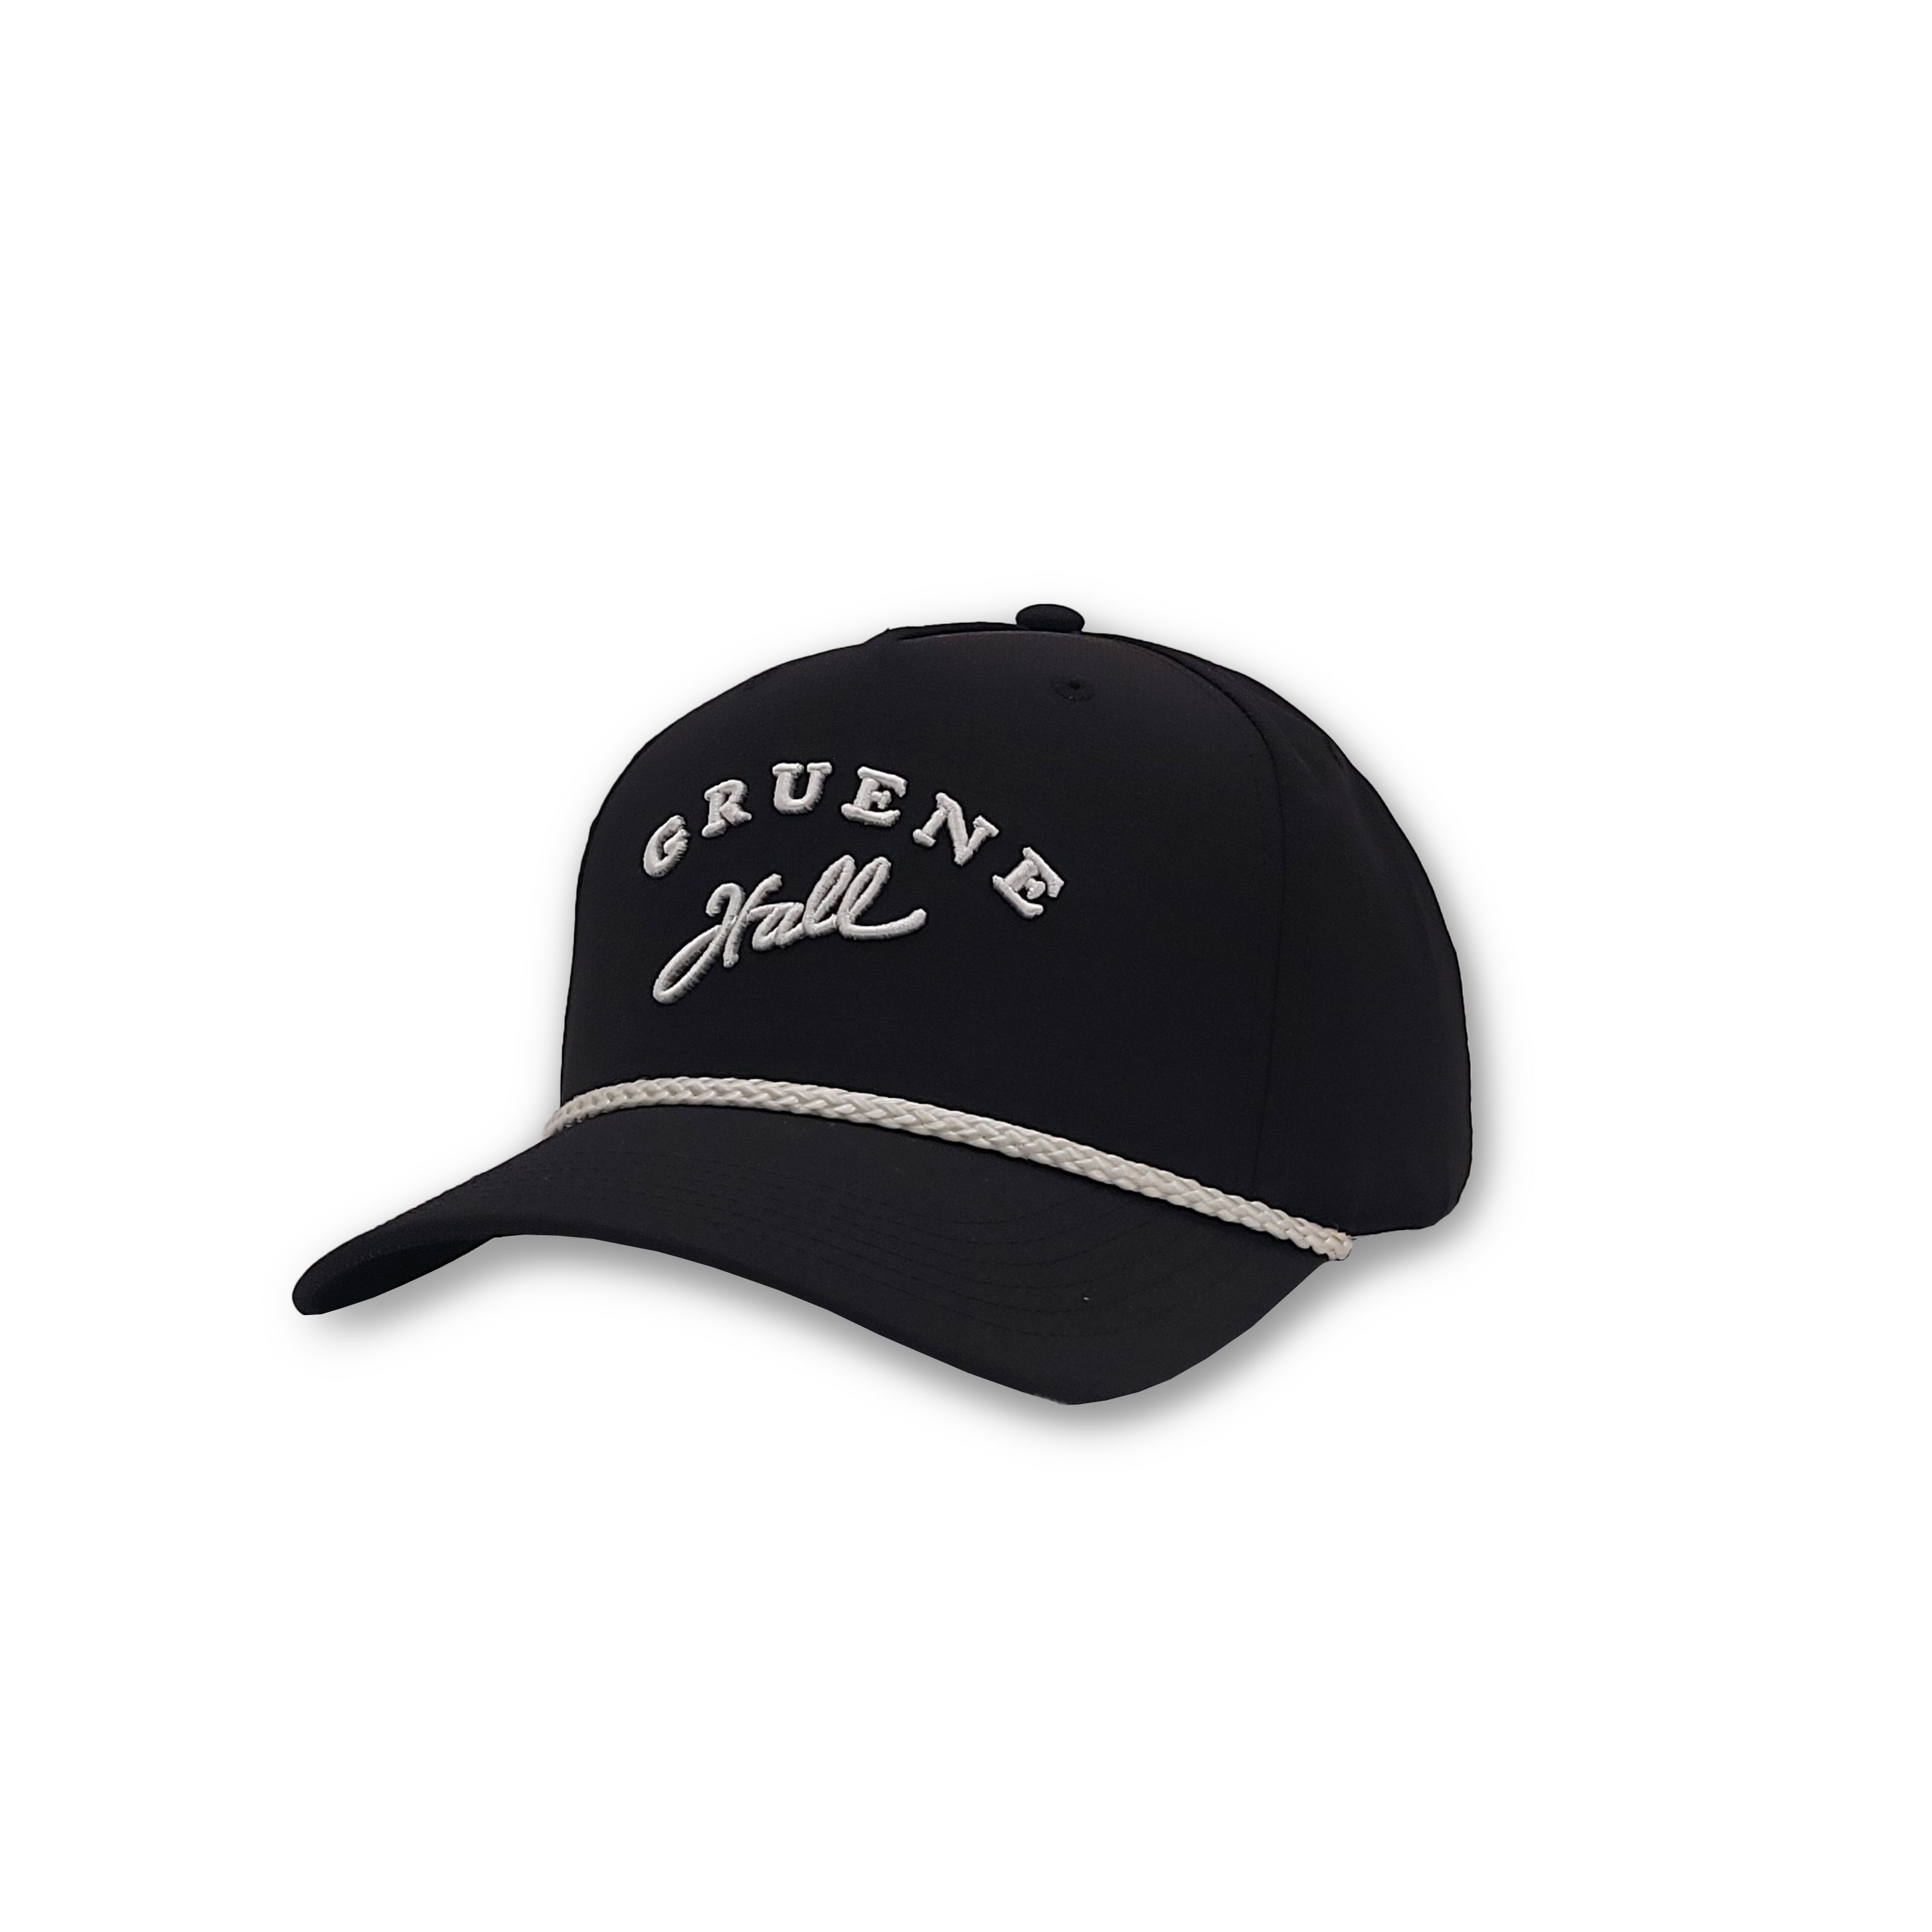 Gruene Hall logo golf hat